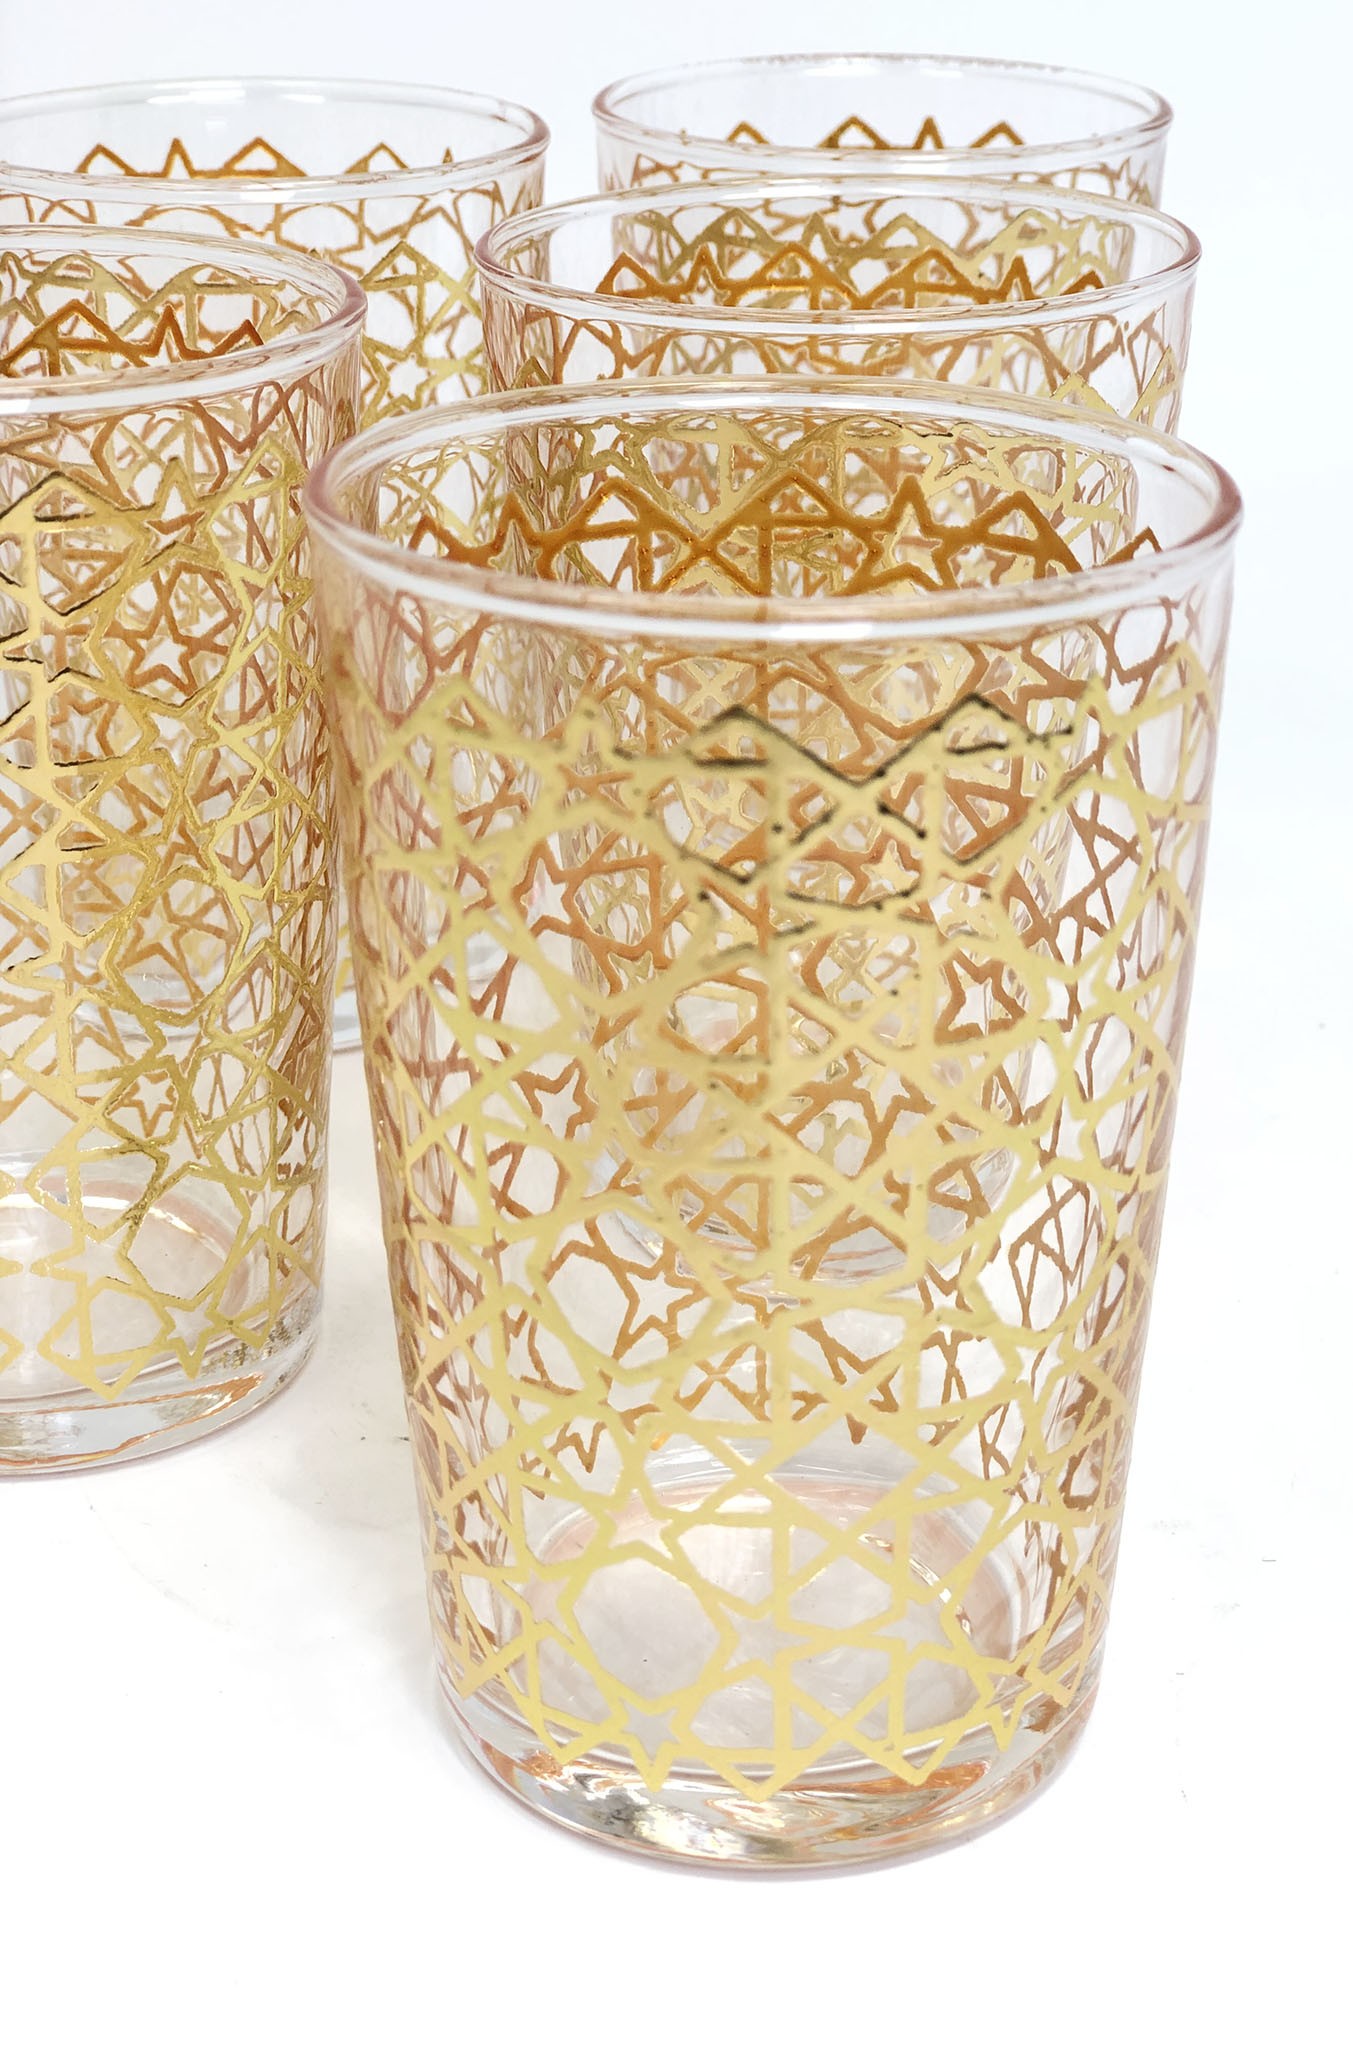 https://www.scentsandfeel.com/wp-content/uploads/2019/08/set-moroccan-tea-glasse-gold-design.jpg